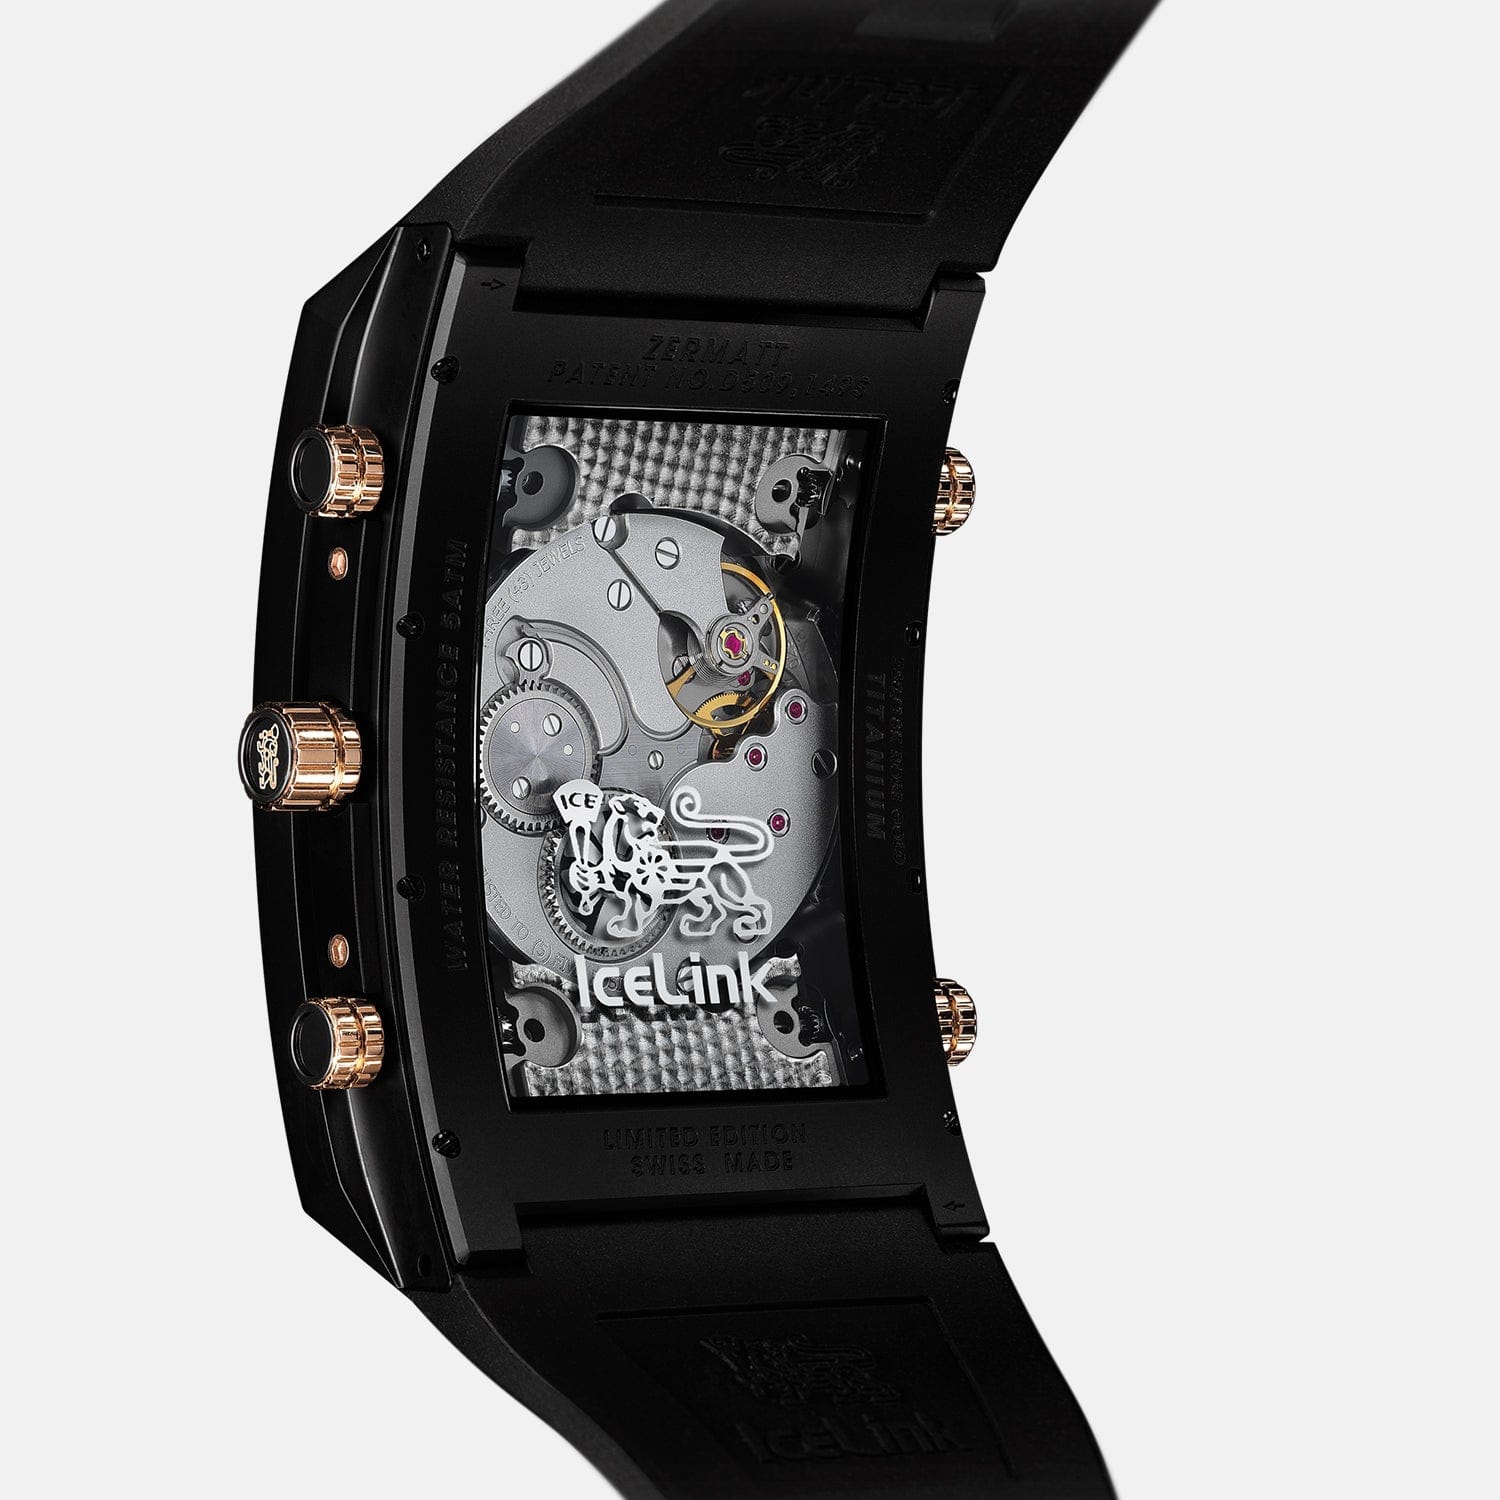 Tudor Chronograph Ref 7169 Monte Carlo – The Watch Collector